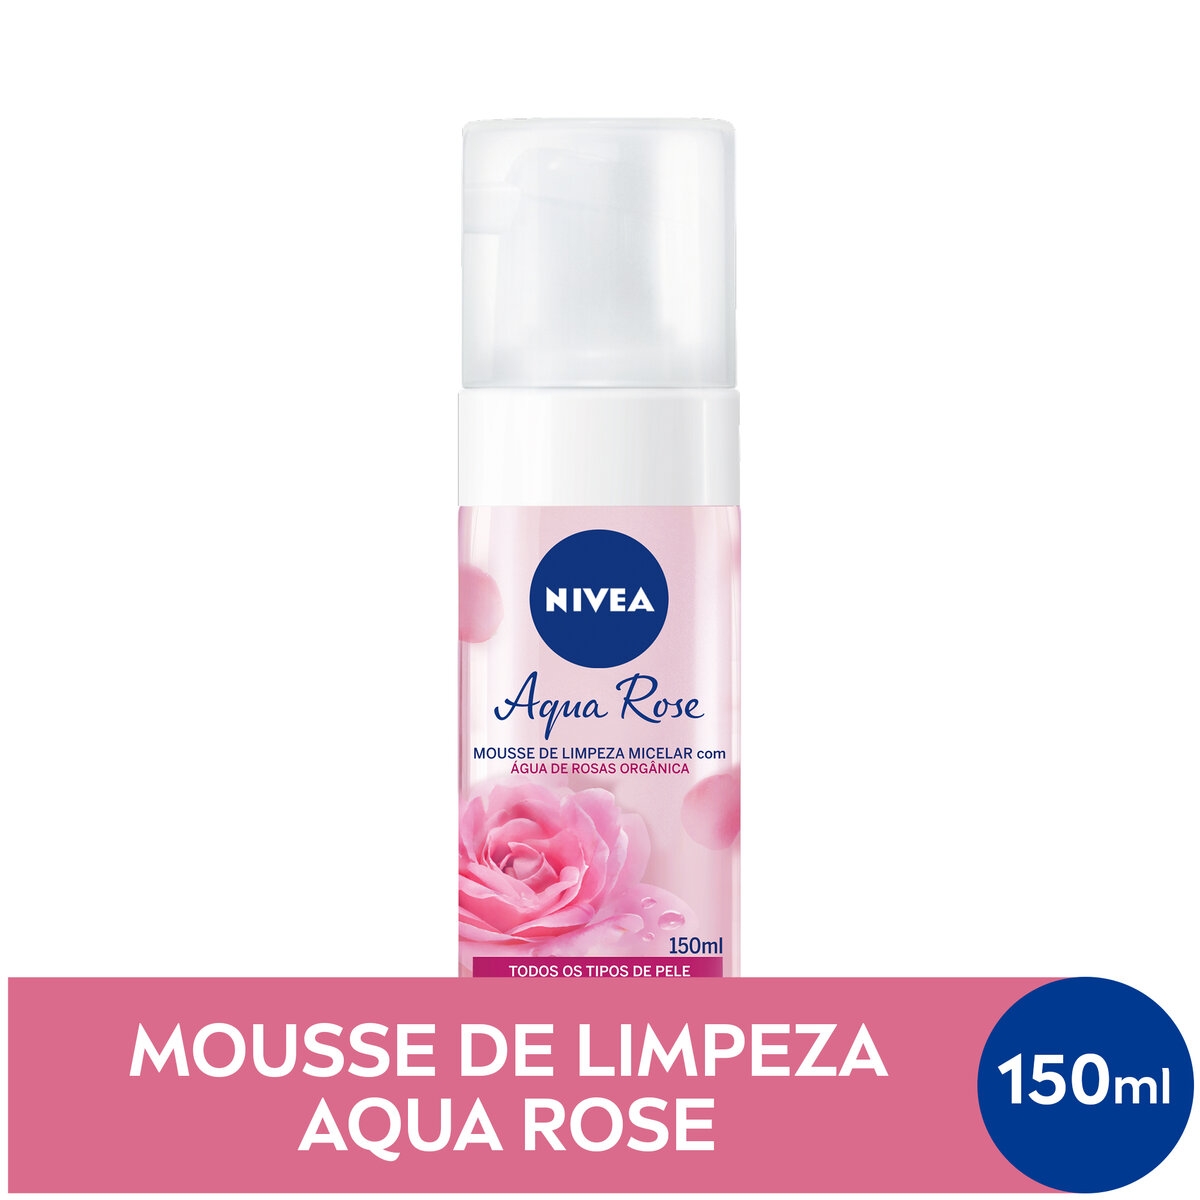 Mousse de Limpeza Facial Nivea Aqua Rose 150ml 150ml